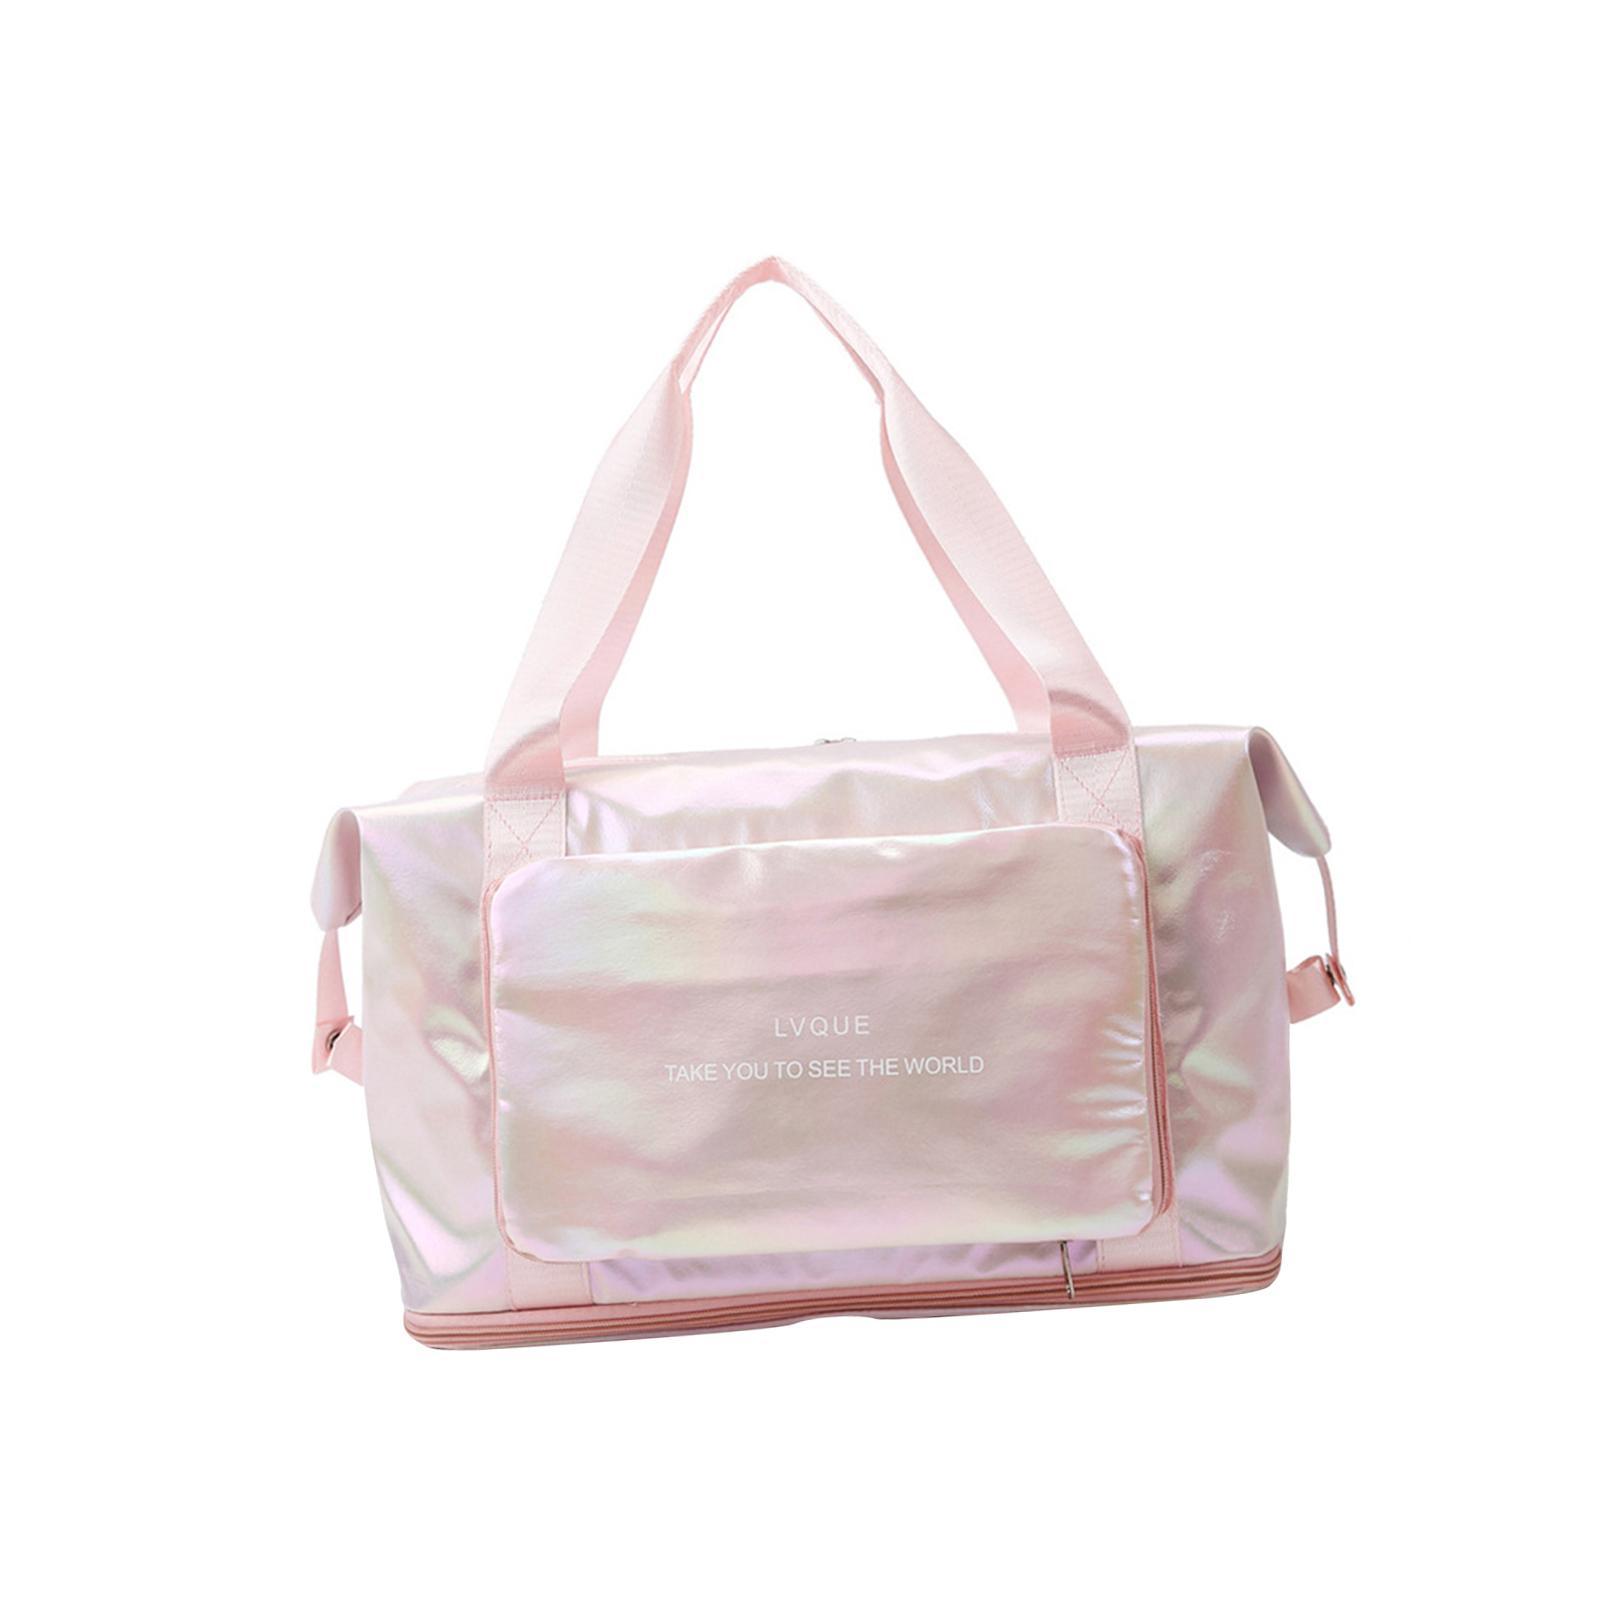 Travel Duffle Bag Sports Gym Bag Weekender Bag Luggage Portable Waterproof Multipurpose Expandable Overnight Bag Handbag for Camping Fitness